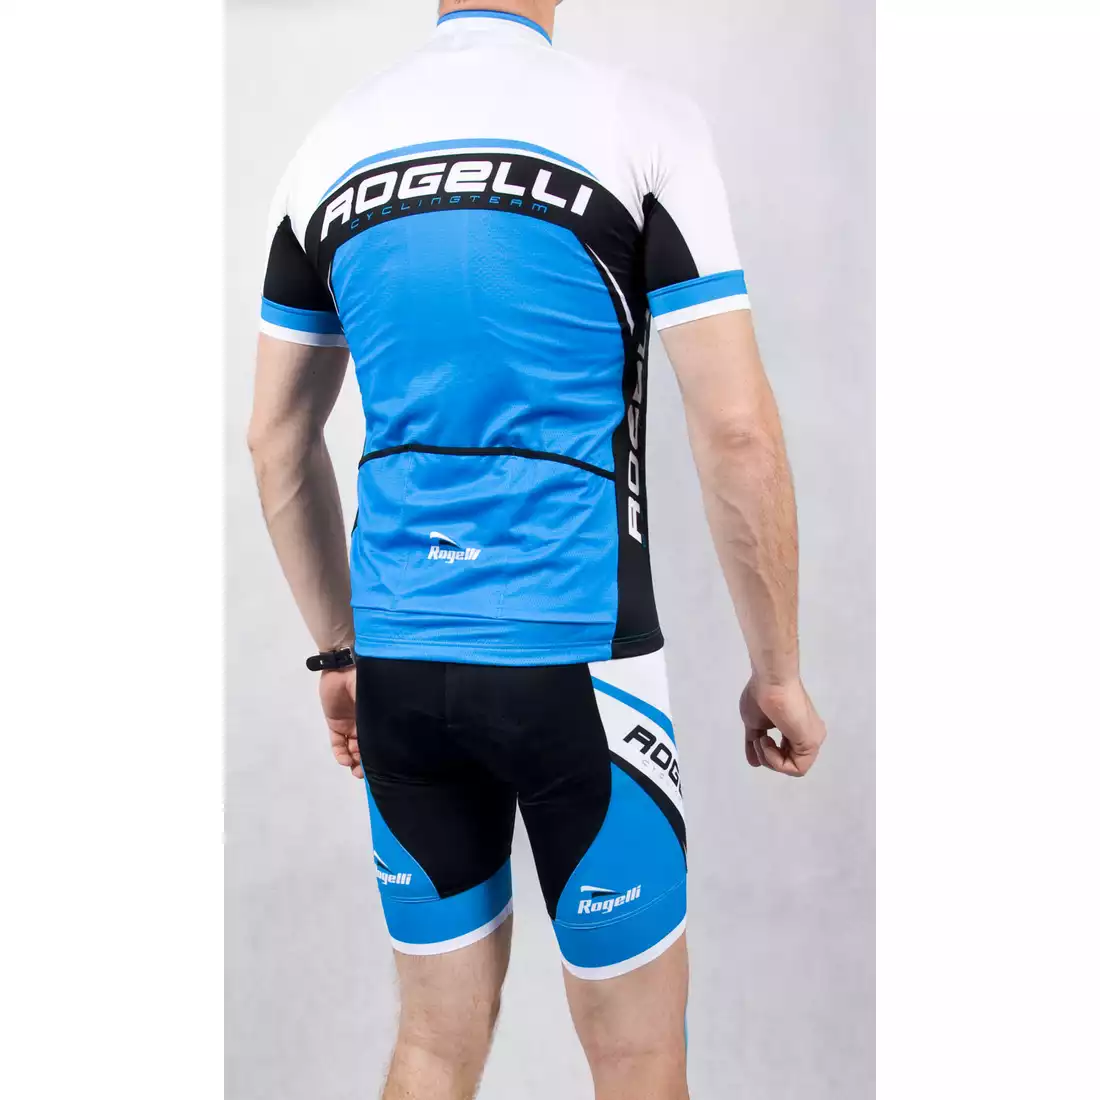 ROGELLI ANCONA - męska koszulka rowerowa, biało-niebieska